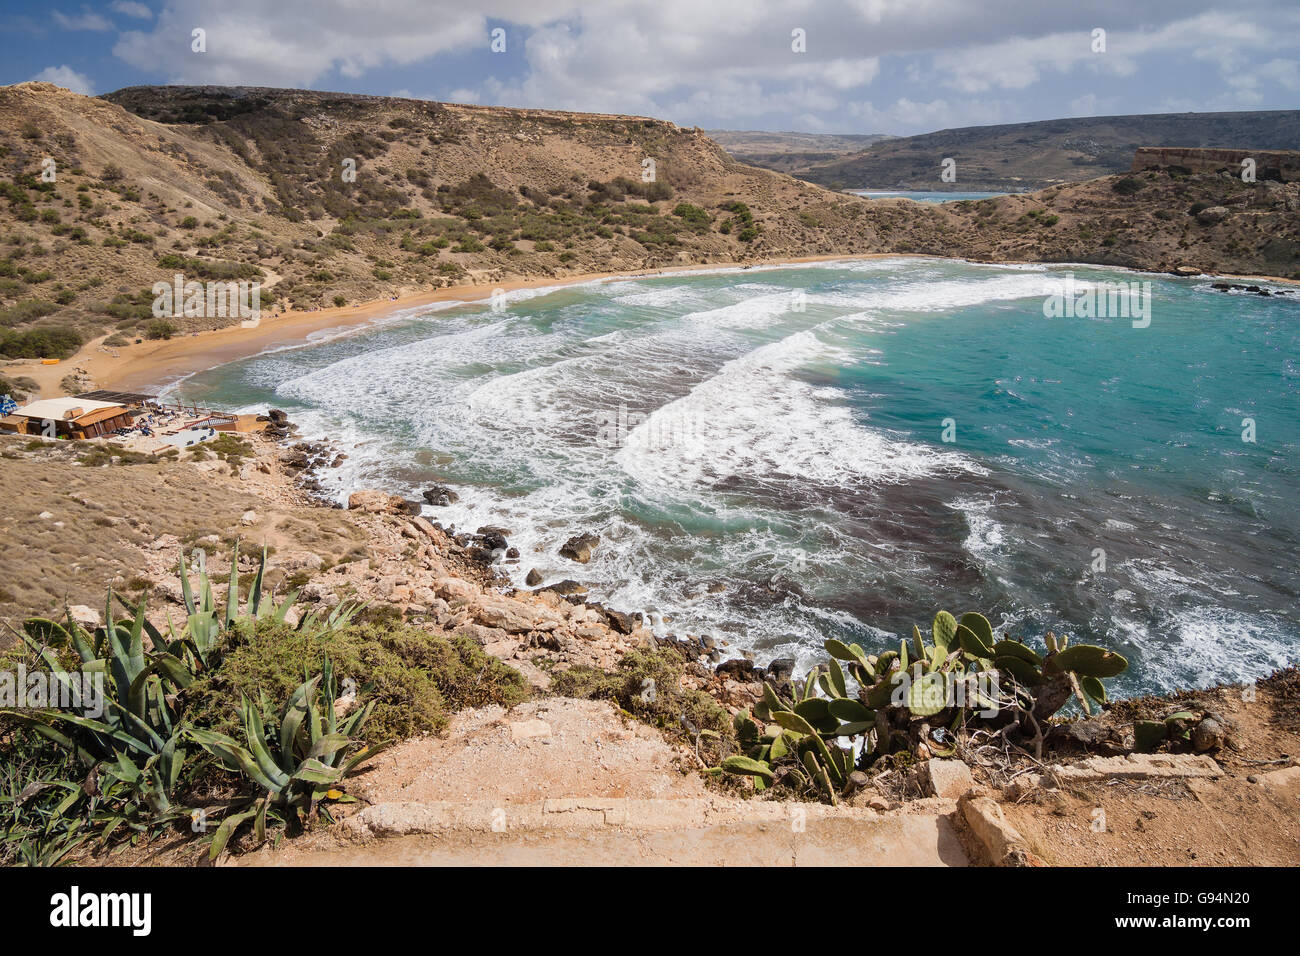 The sandy beach below the rocky cliffs of the Malta island Stock Photo